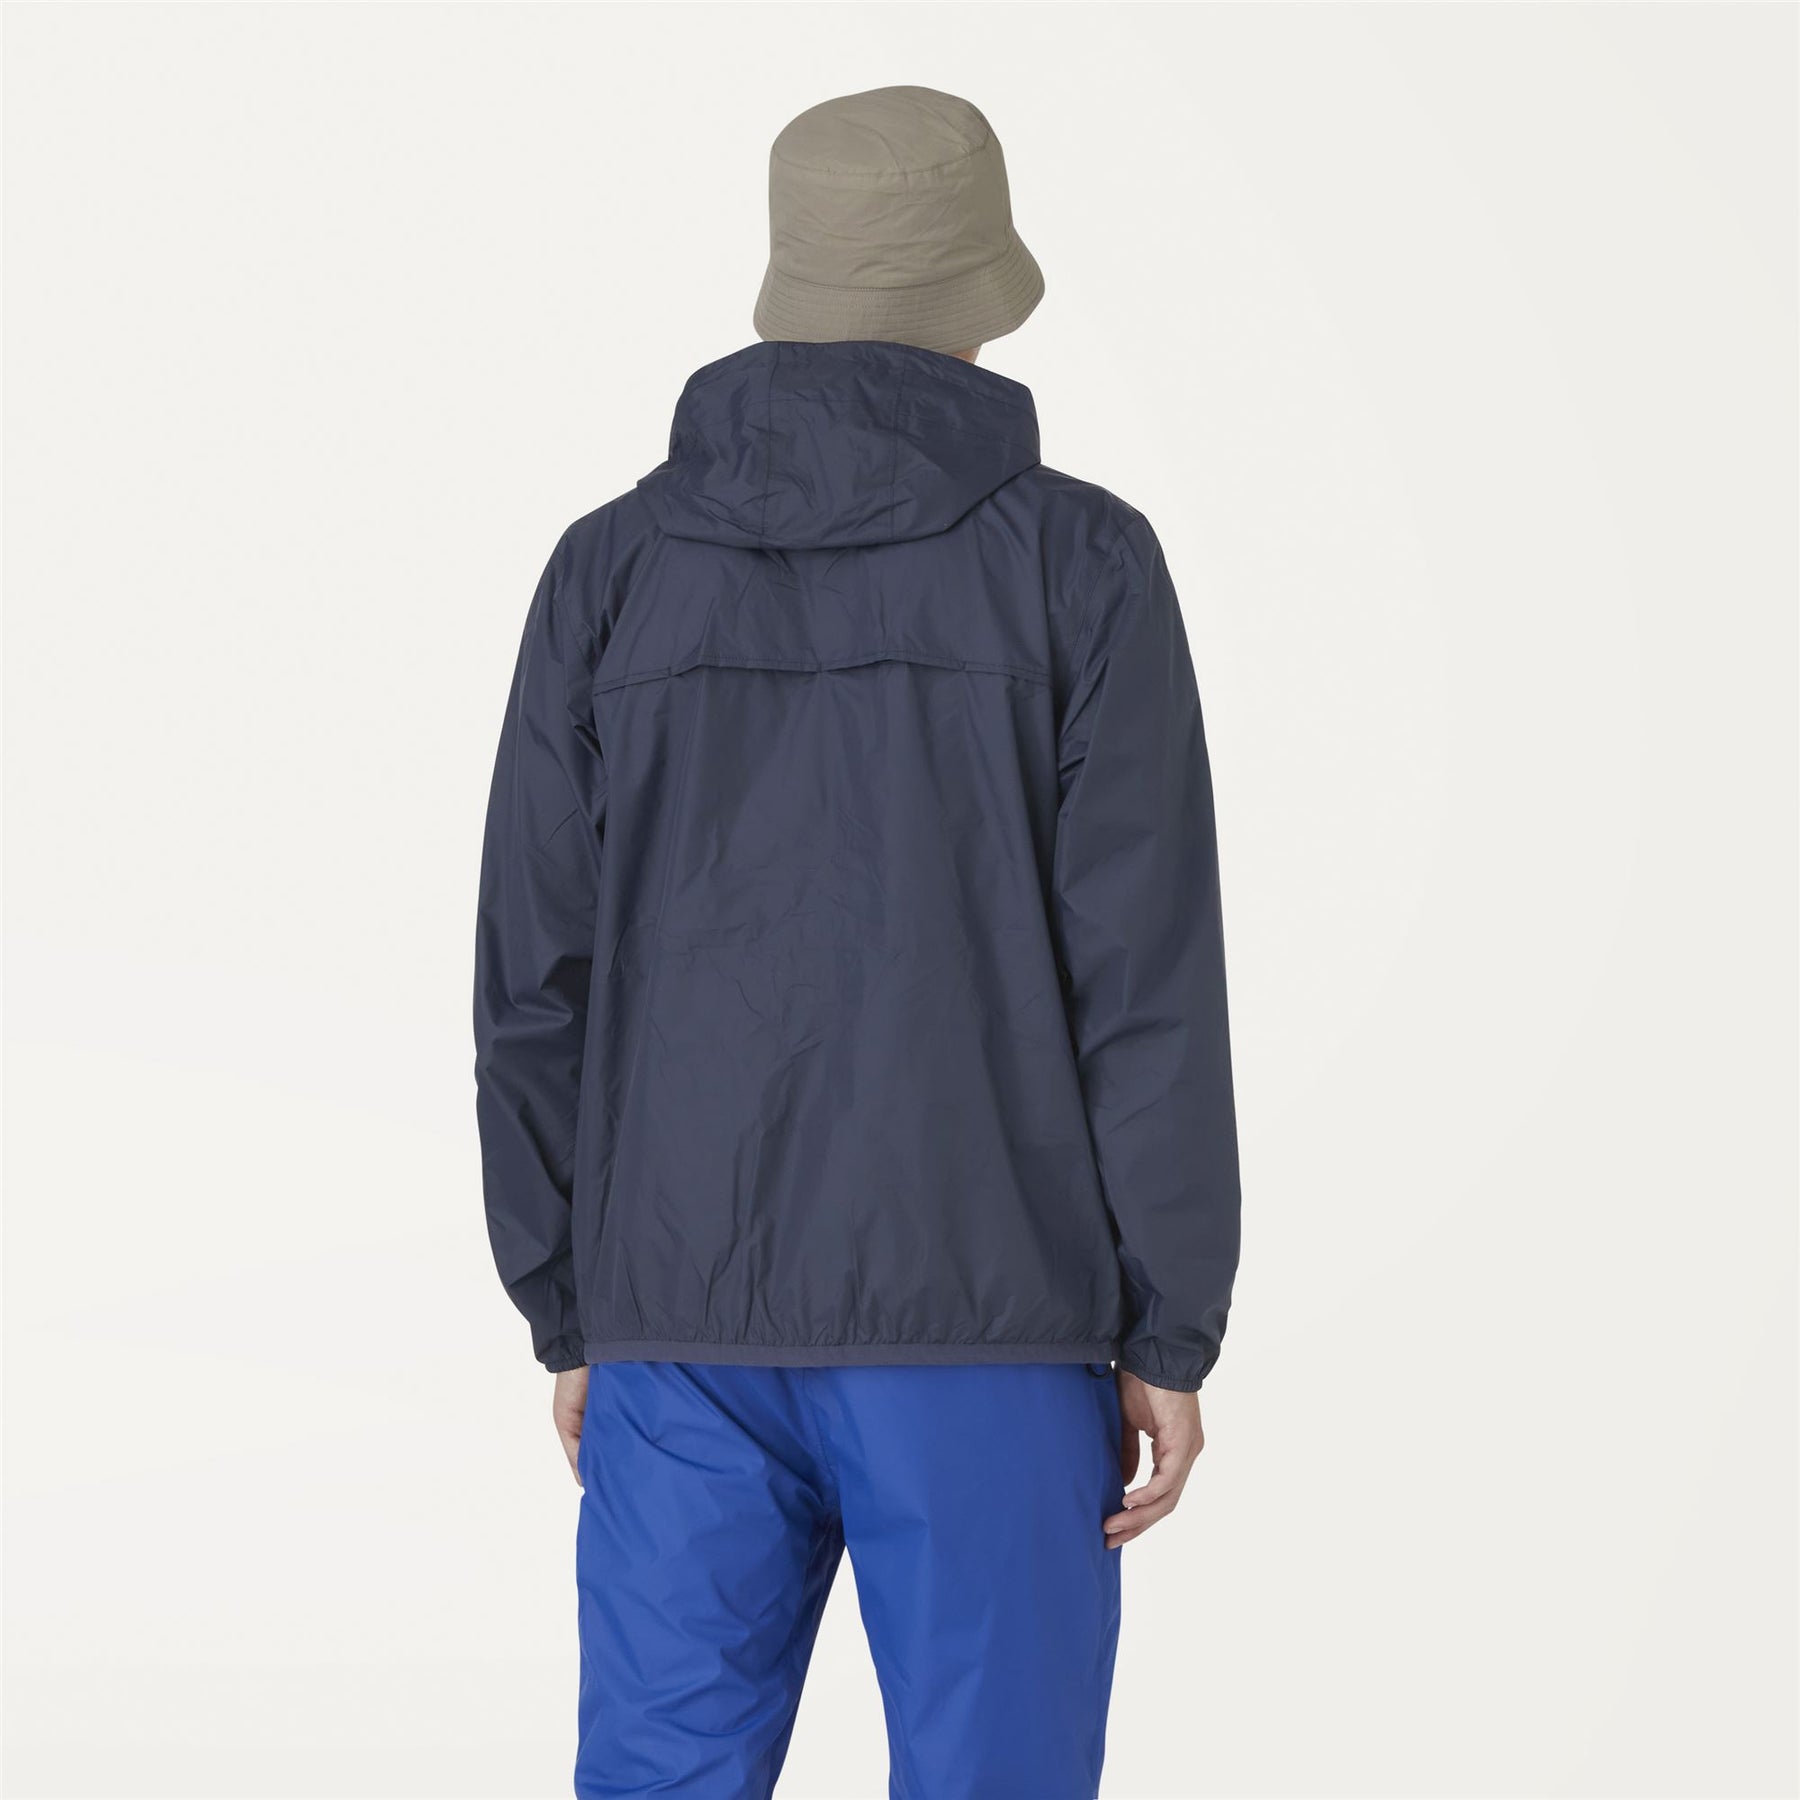 Claude - Unisex Packable Full Zip Waterproof  Rain Jacket in Blue Depht